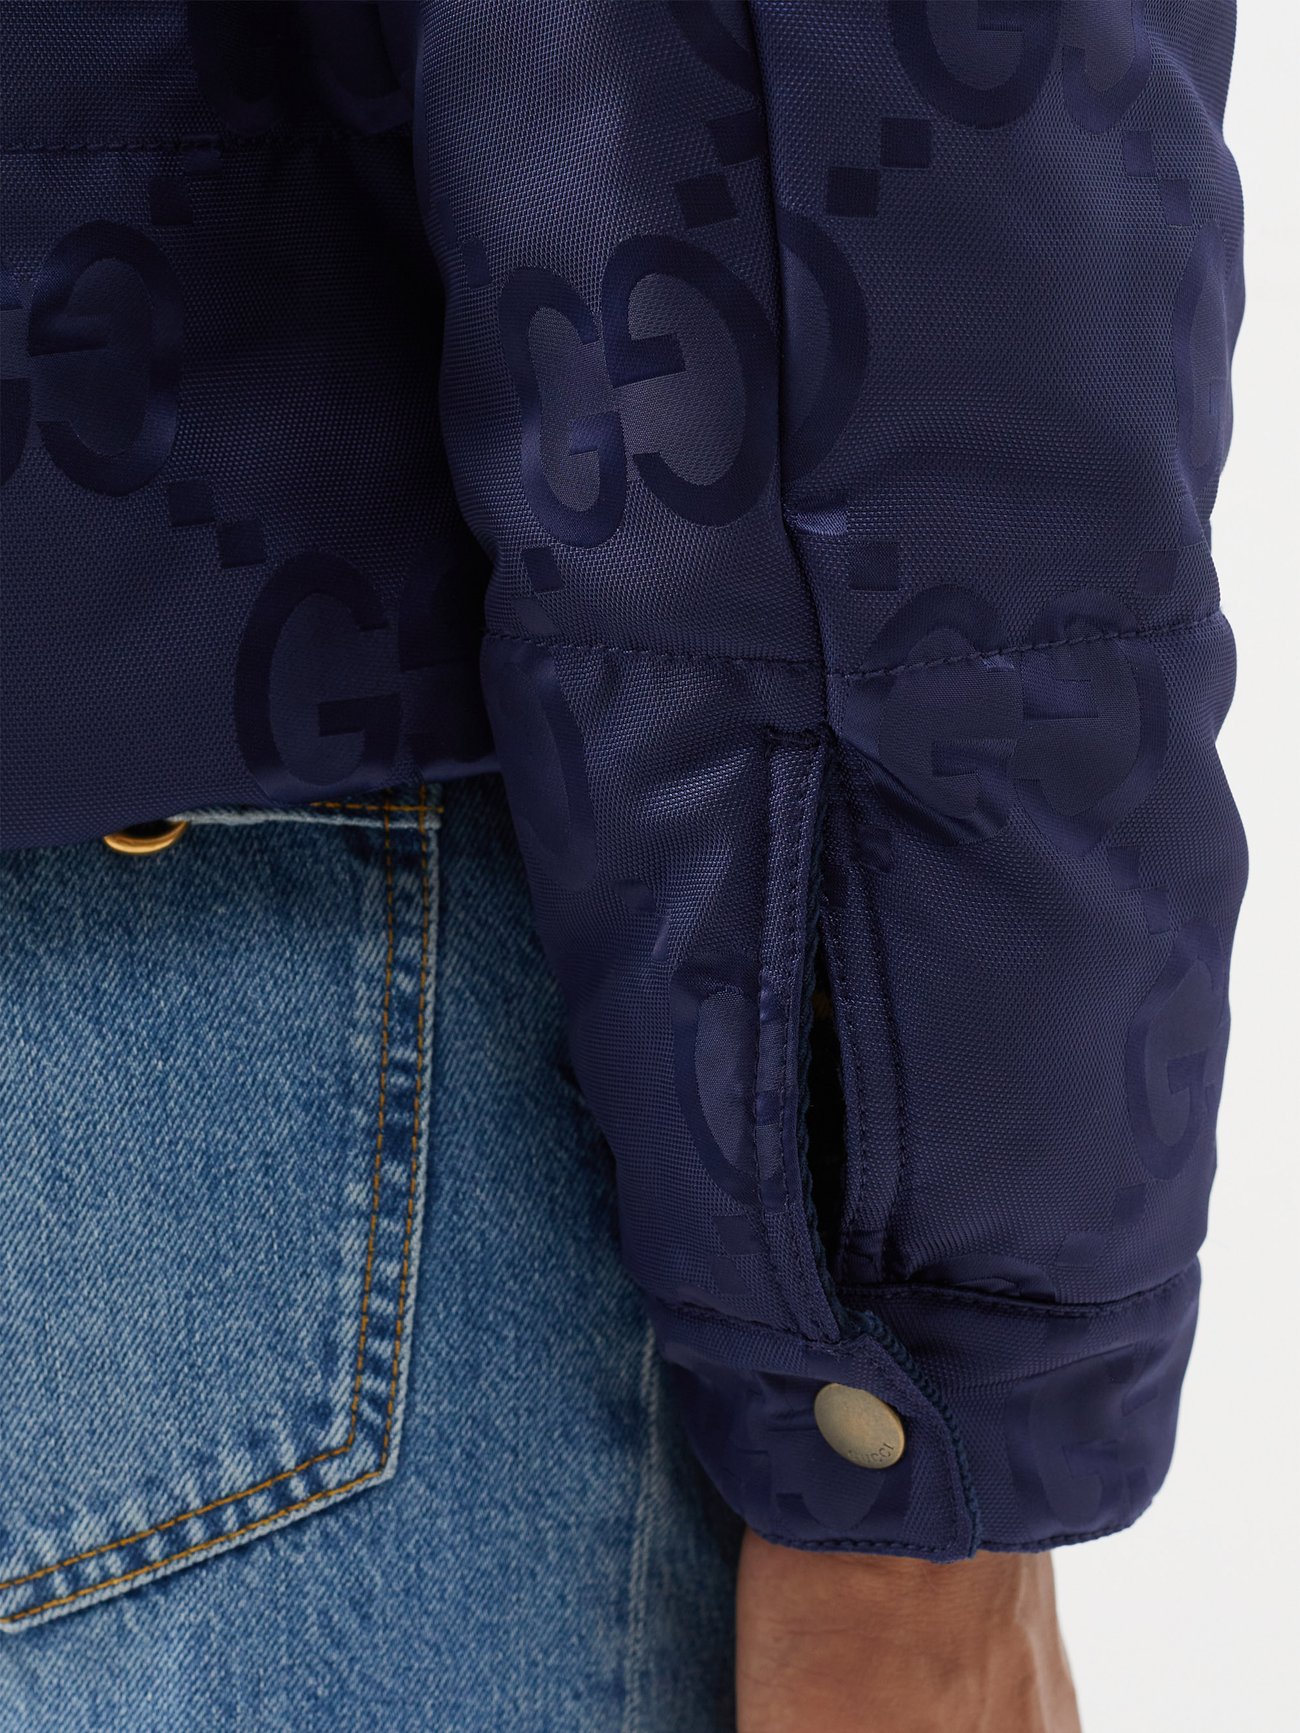 Gucci Men's GG Supreme Reversible Denim Jacket